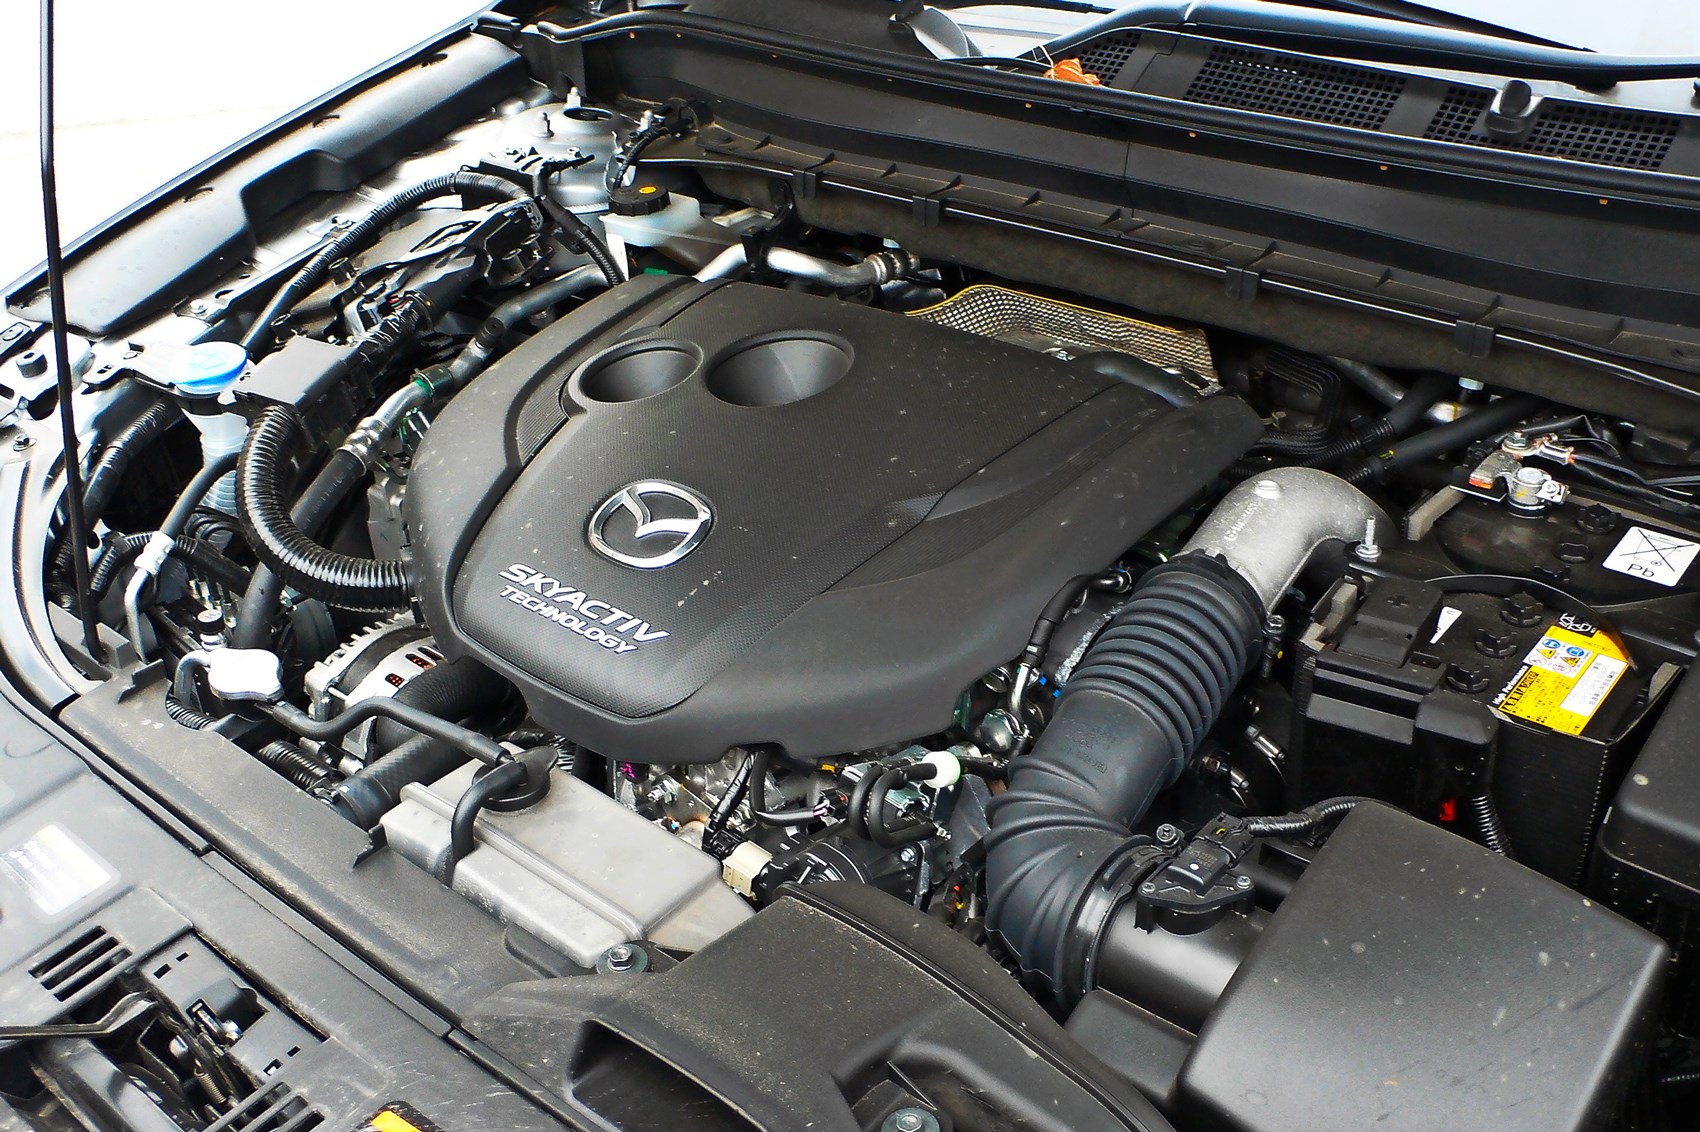 2020 Mazda 3 Hatchback Yearlong Review: The Verdict